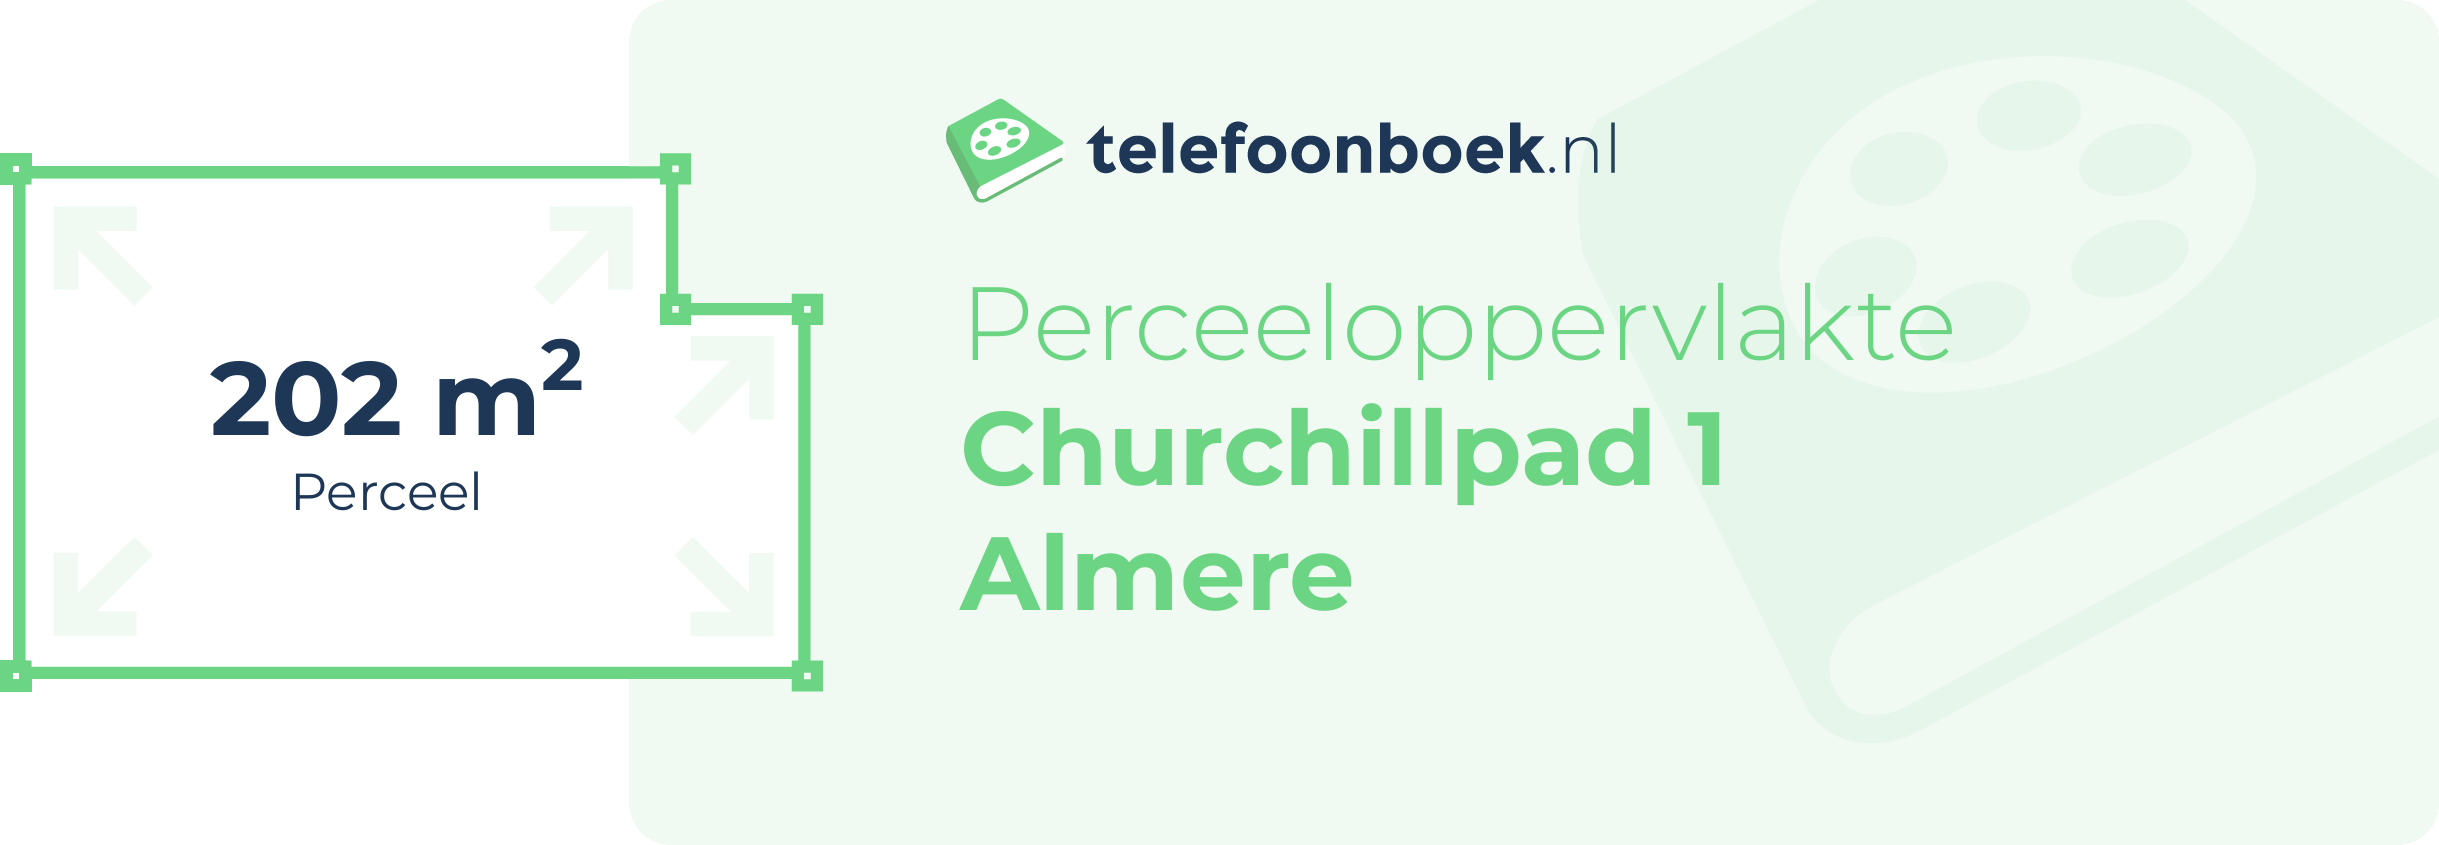 Perceeloppervlakte Churchillpad 1 Almere